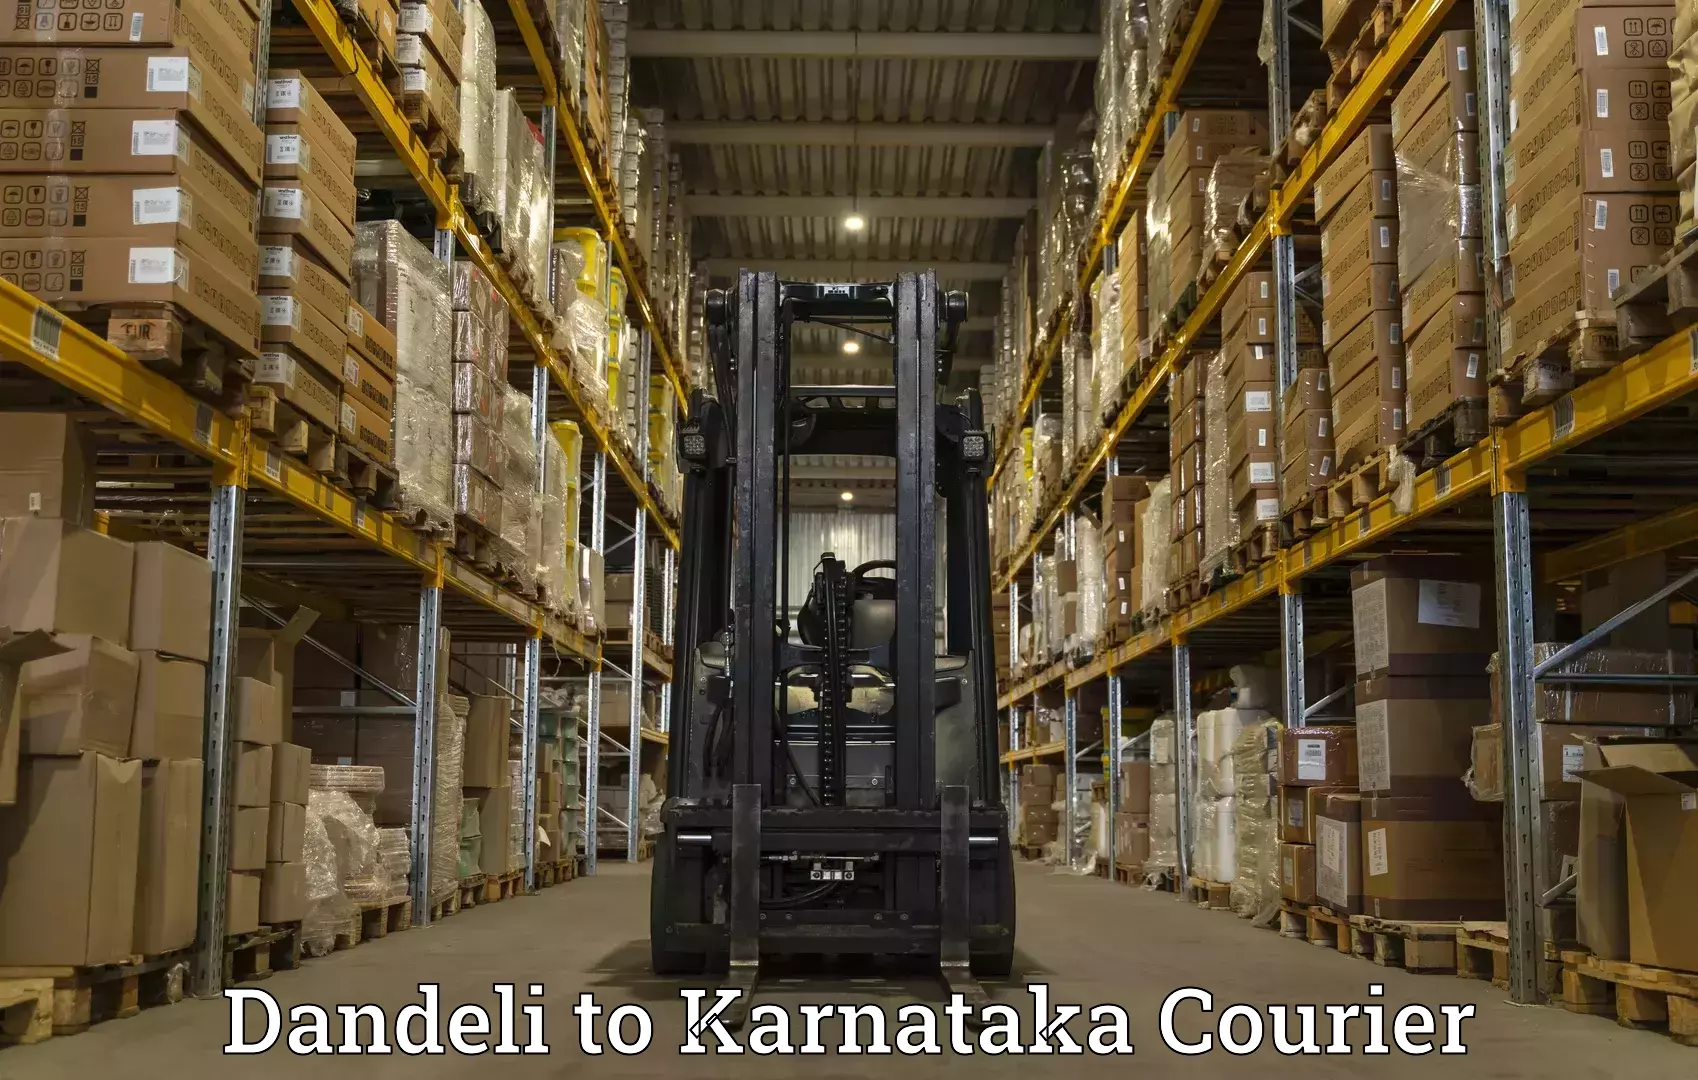 Global shipping networks Dandeli to Karnataka